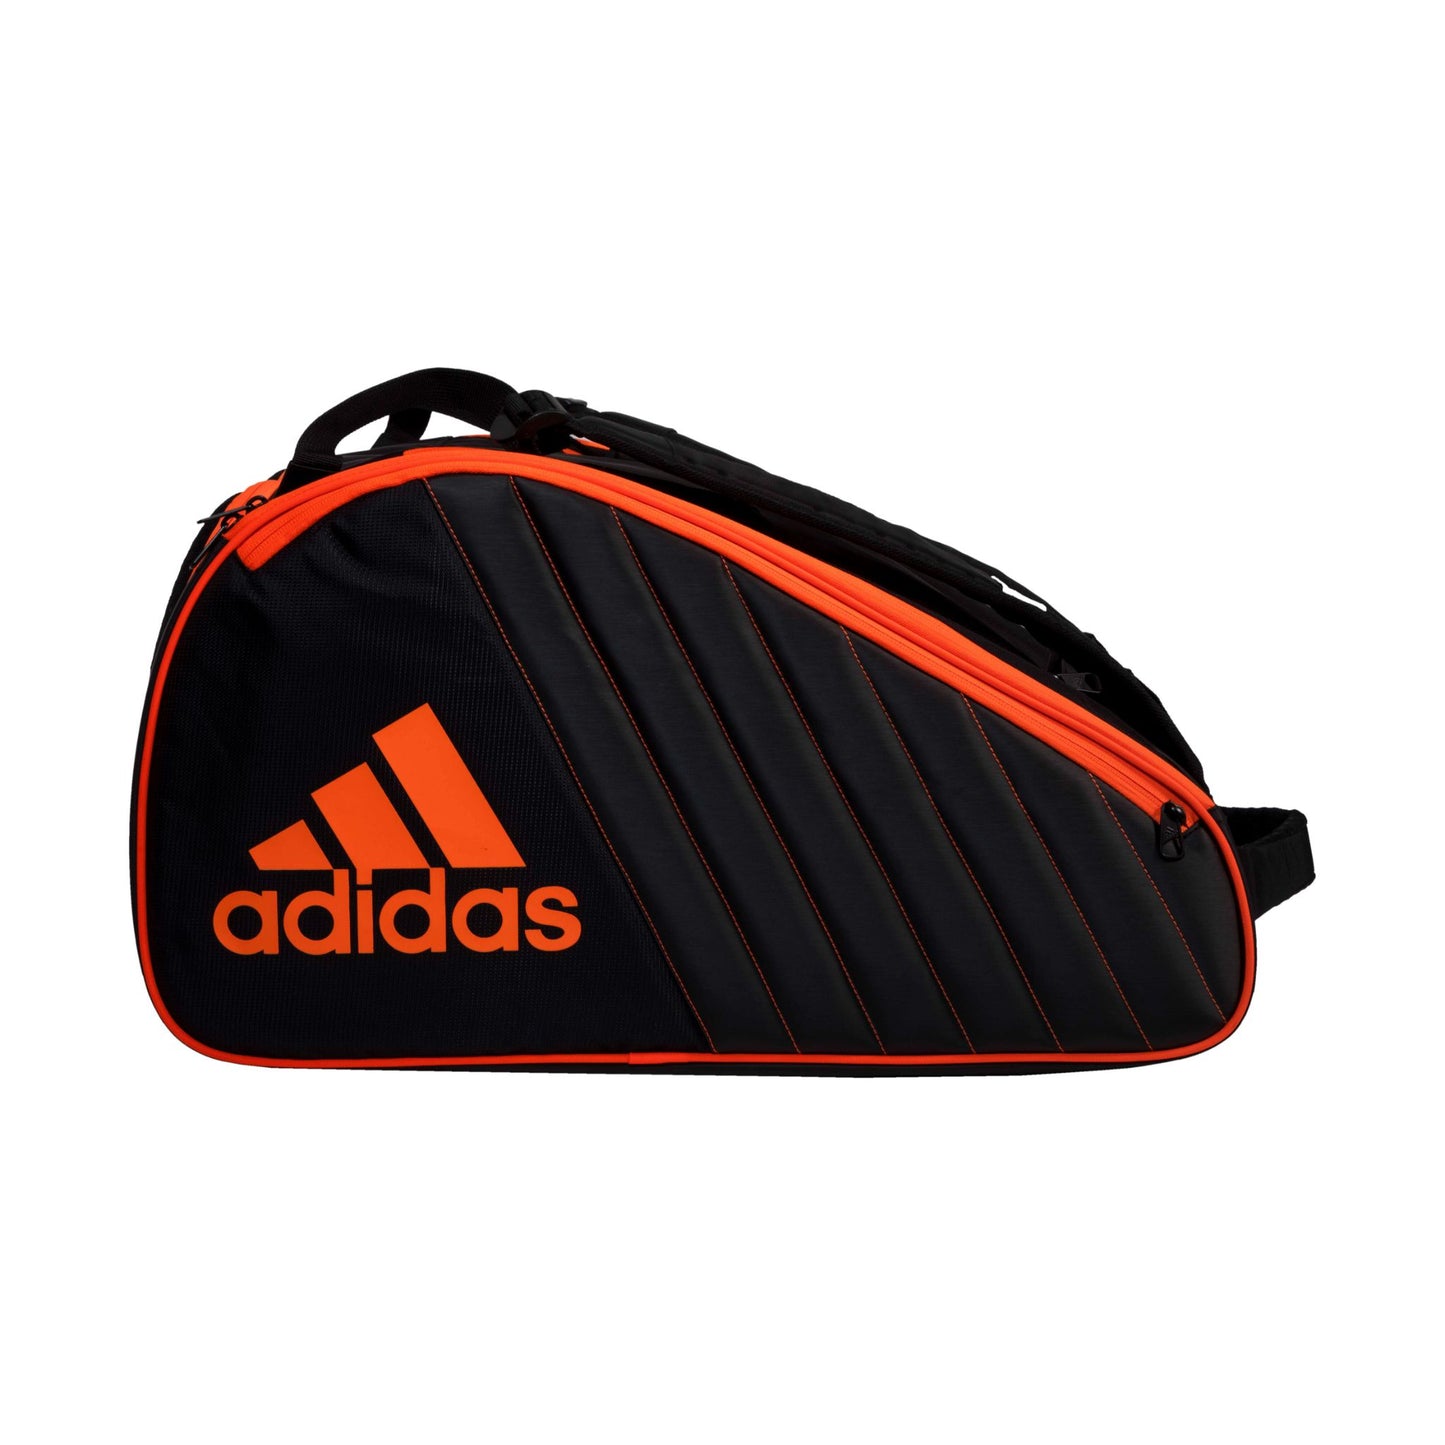 Adidas Protour Racket Bag - Orange